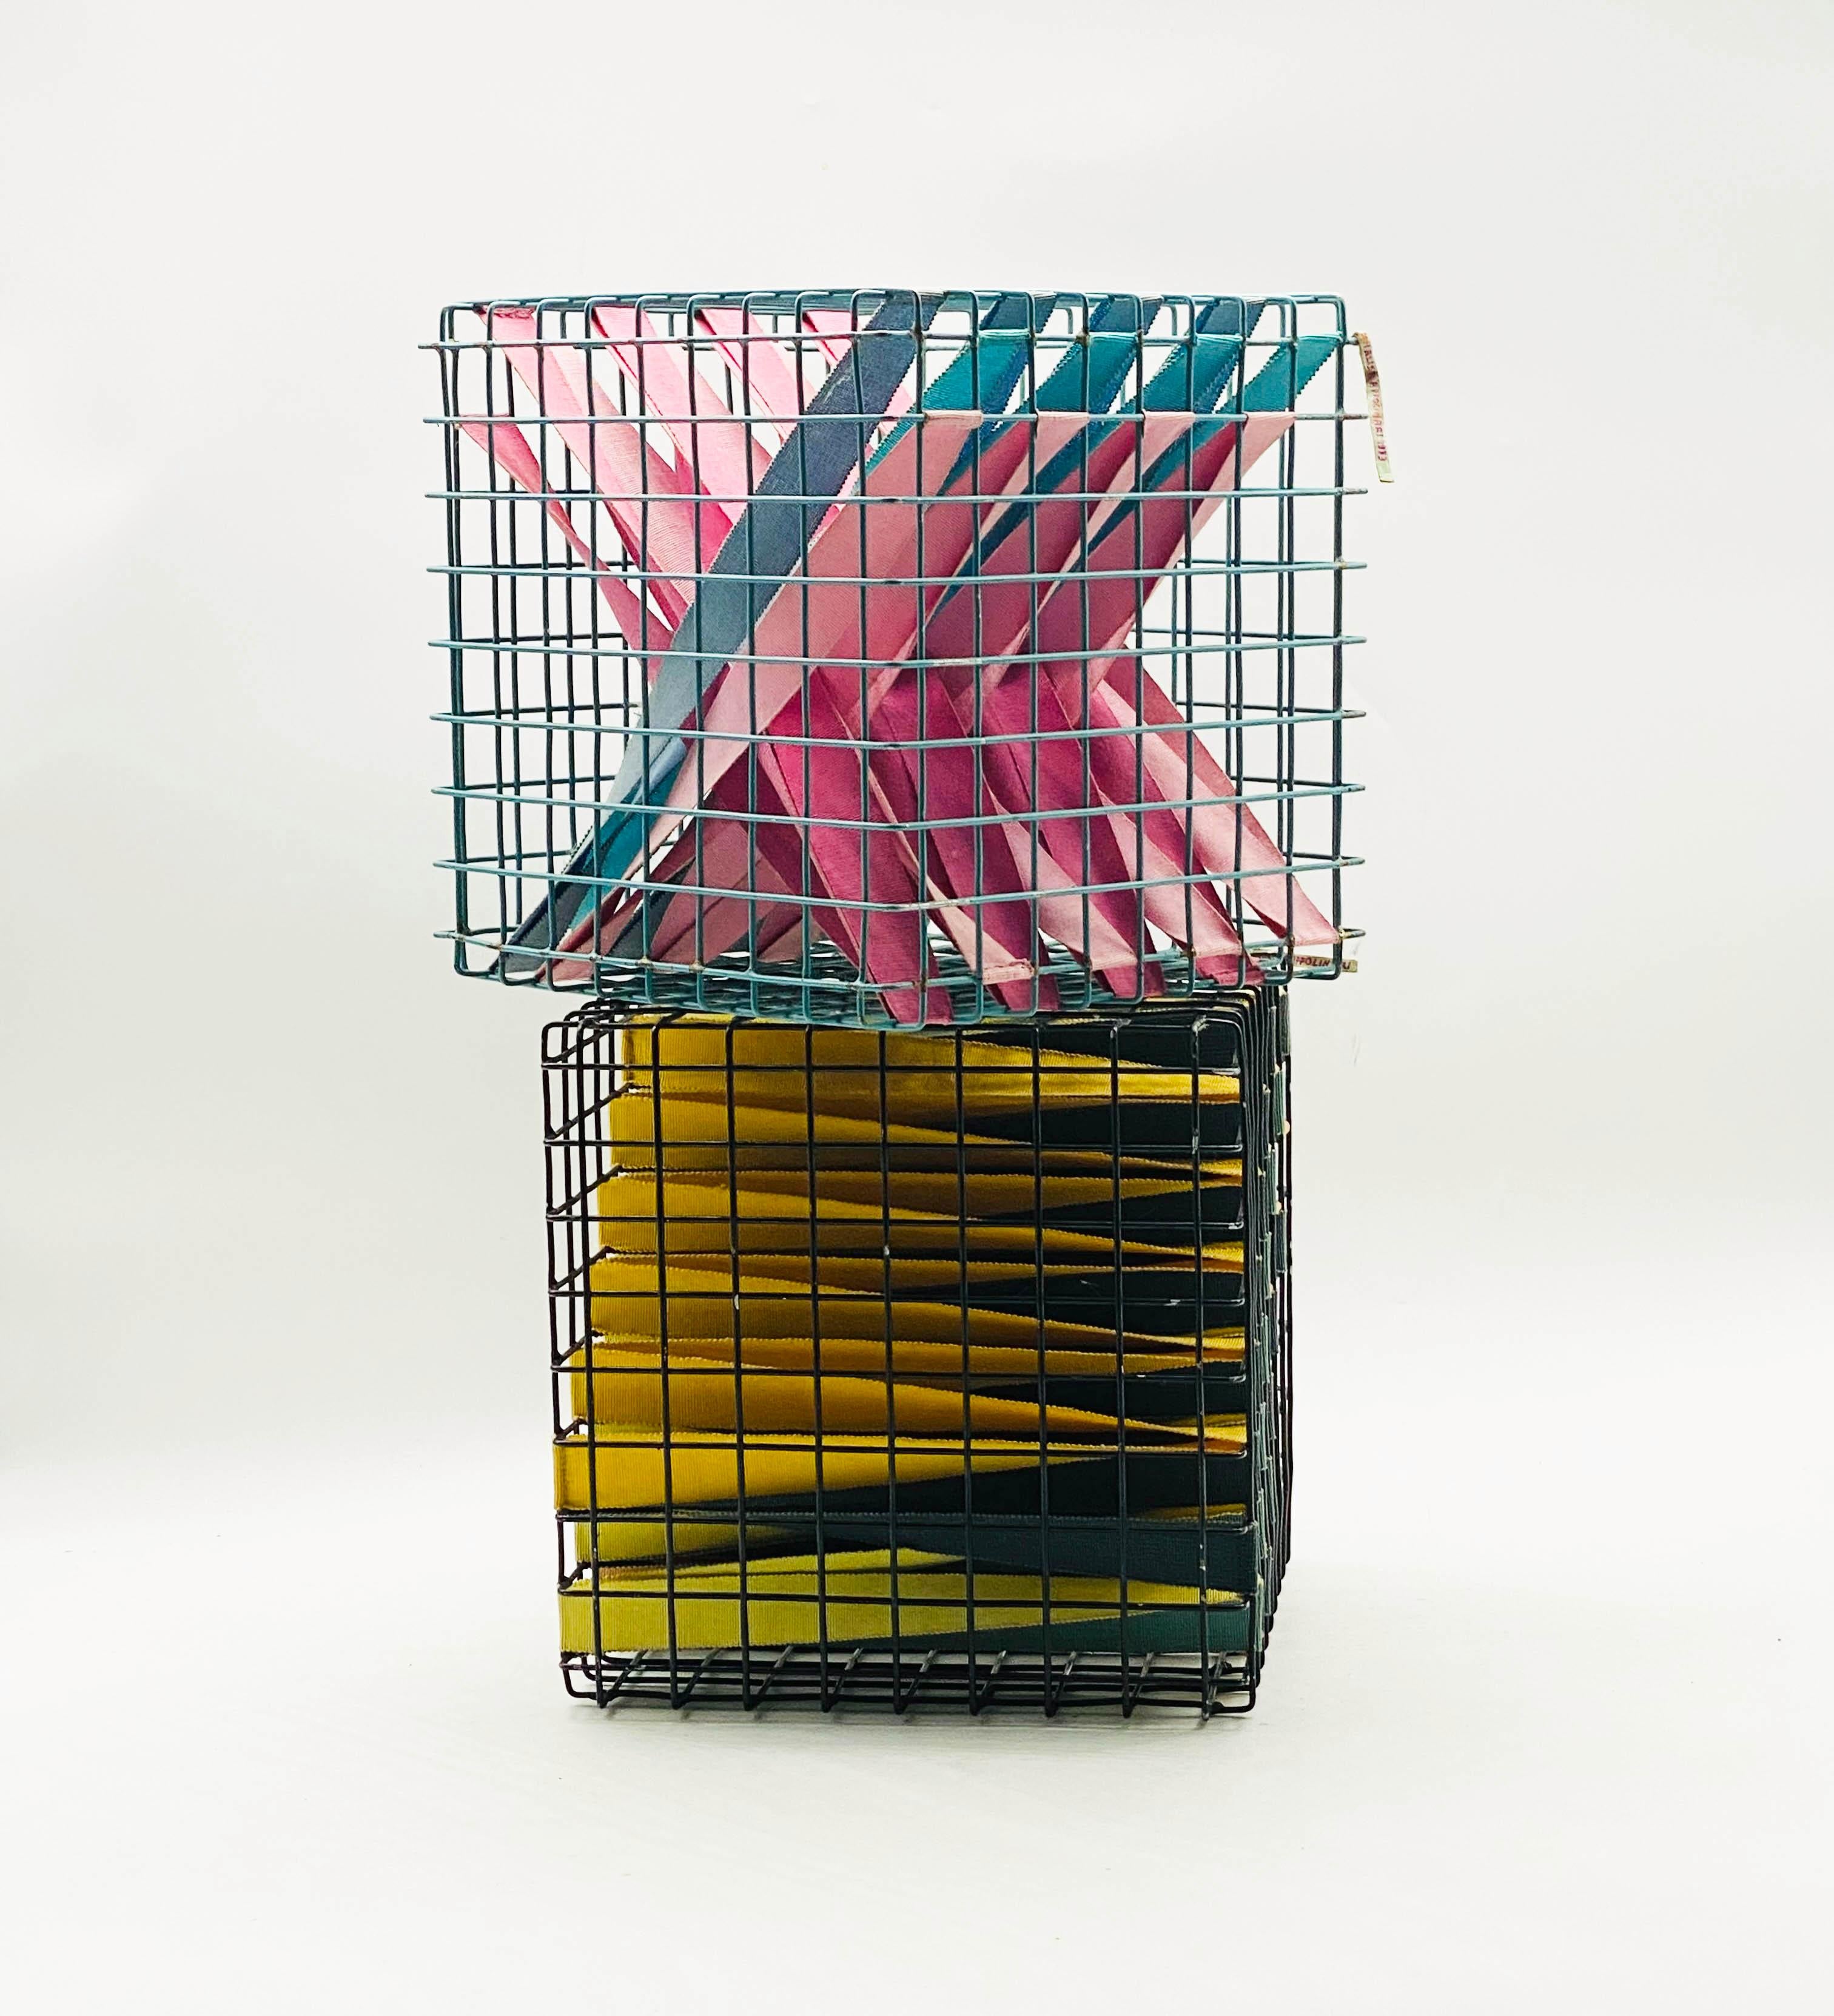 Mid-Century Modern Modernist Cube Sculpture by Annalisa Appollinari, Italy, 1983